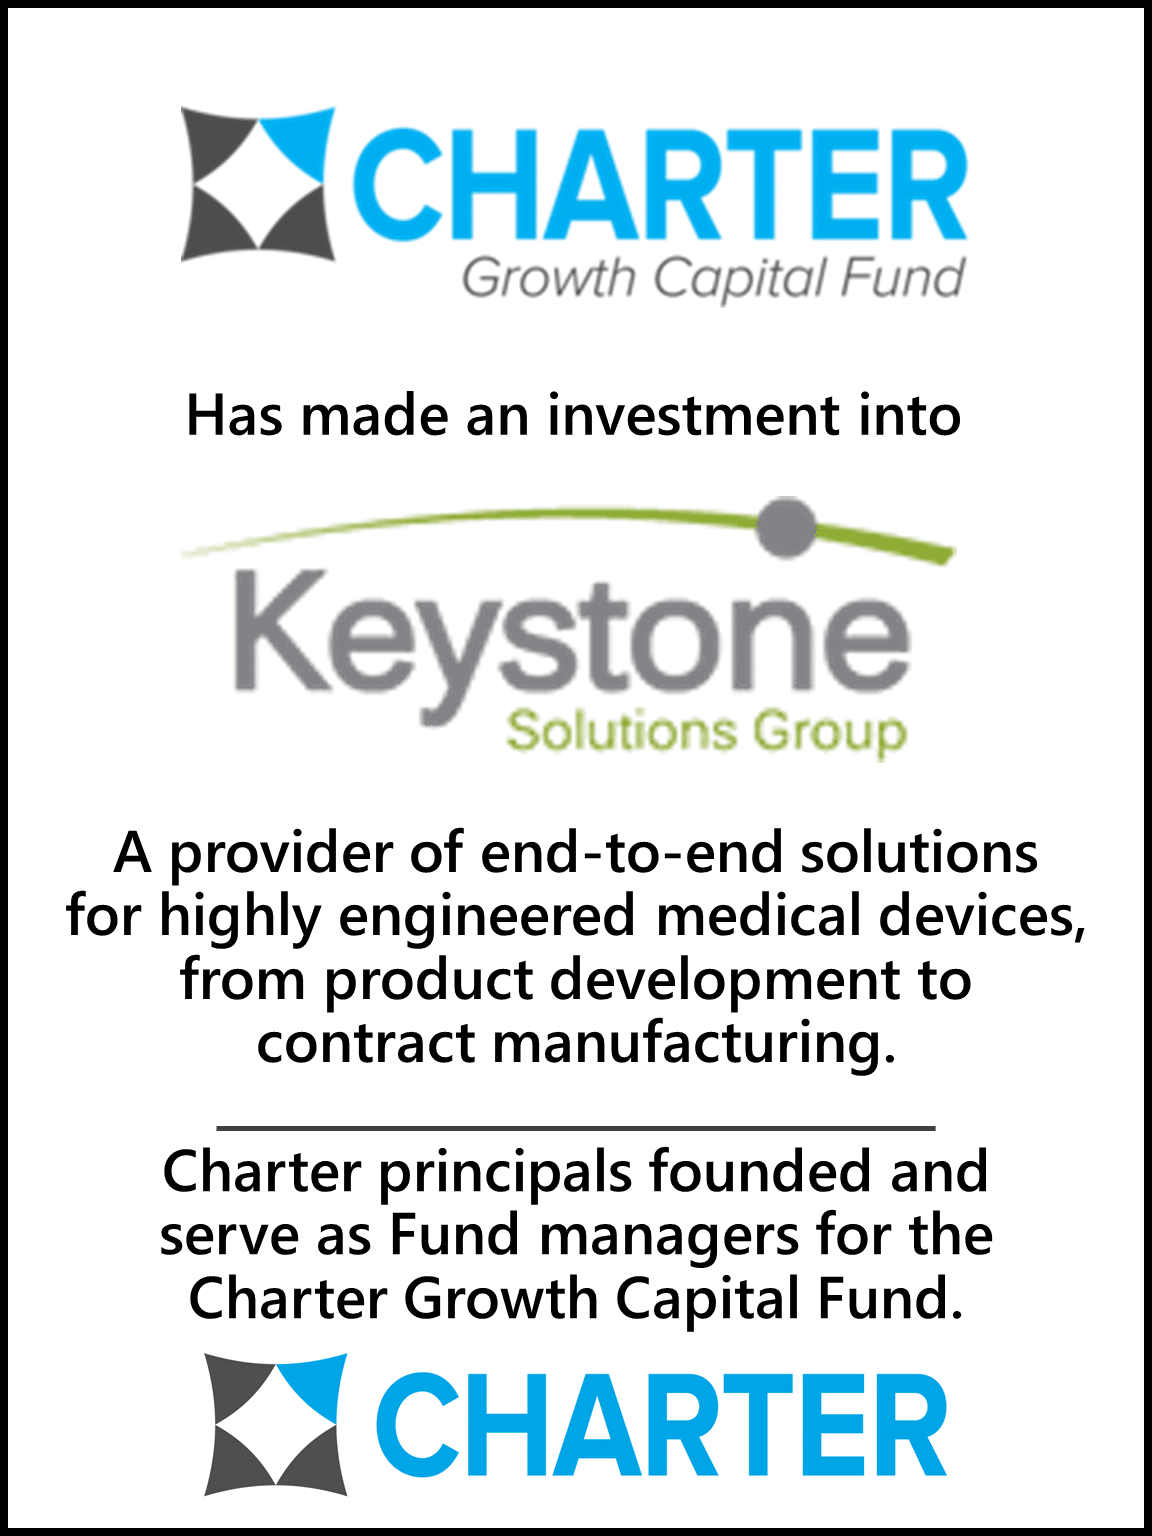 Keystone Solutions Group